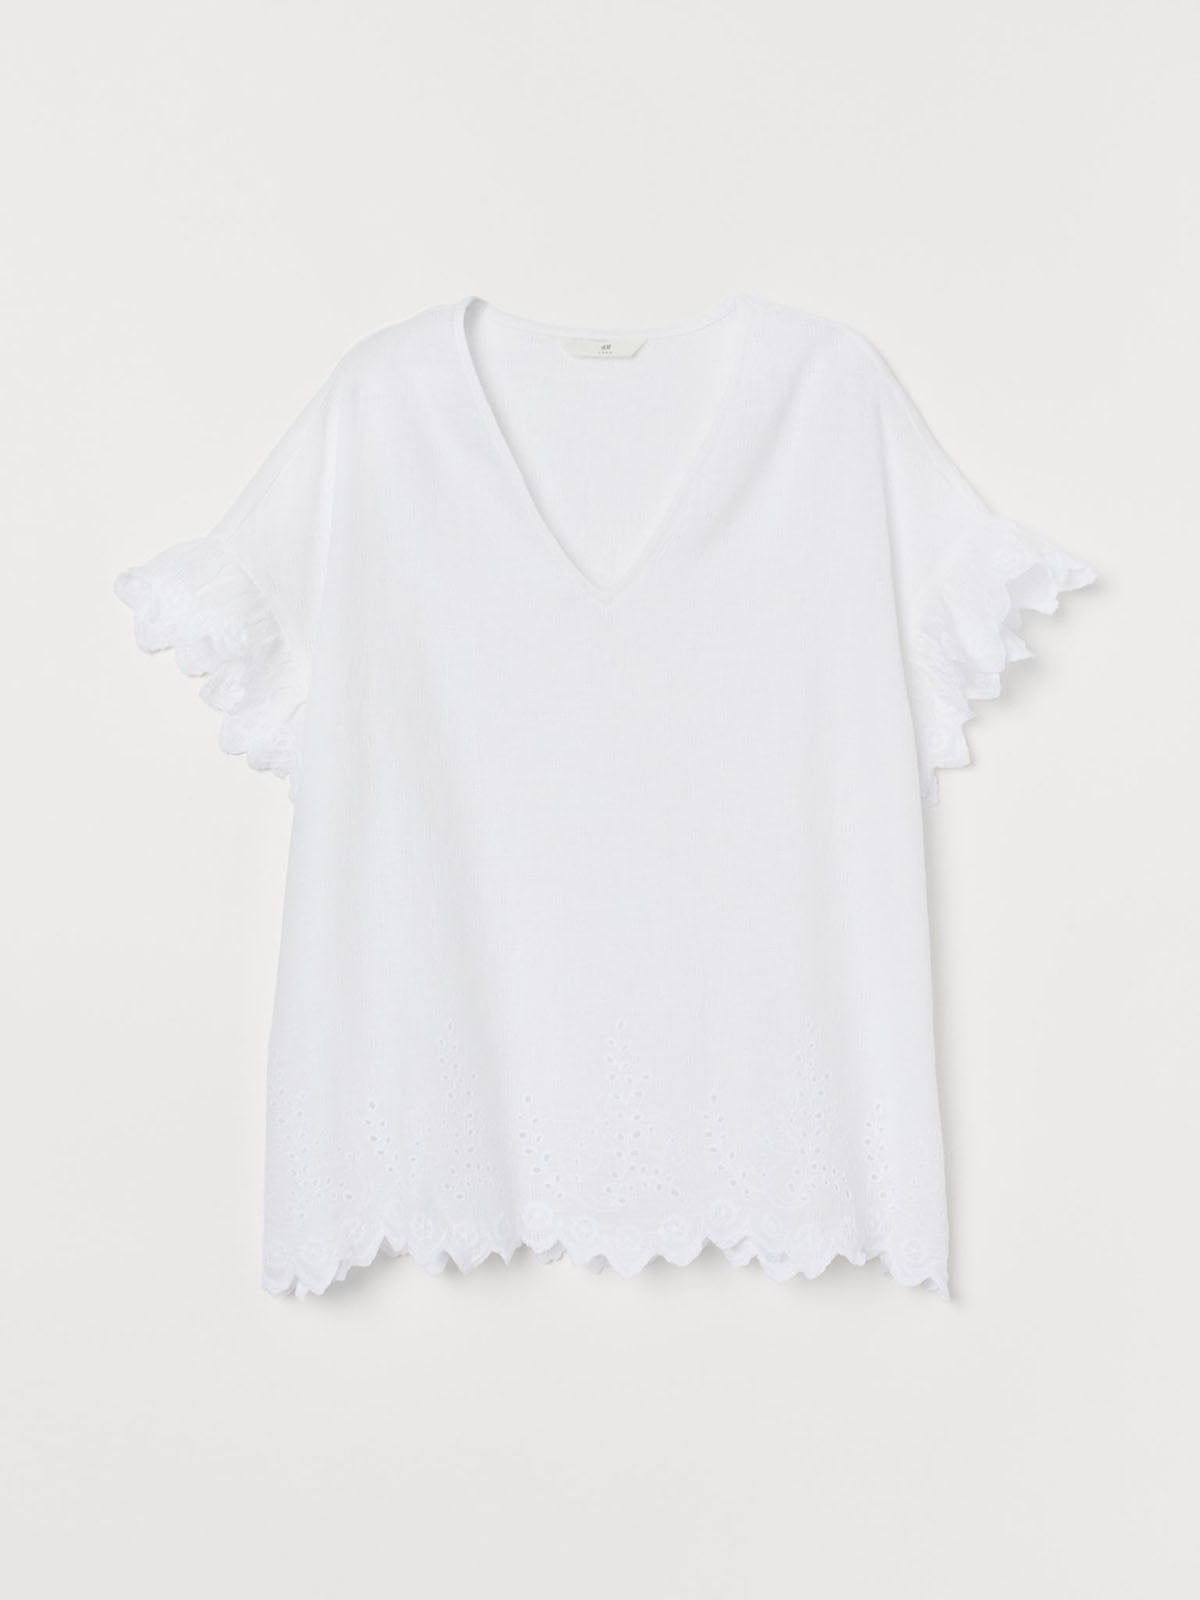 Блуза белая с узором | 5779284